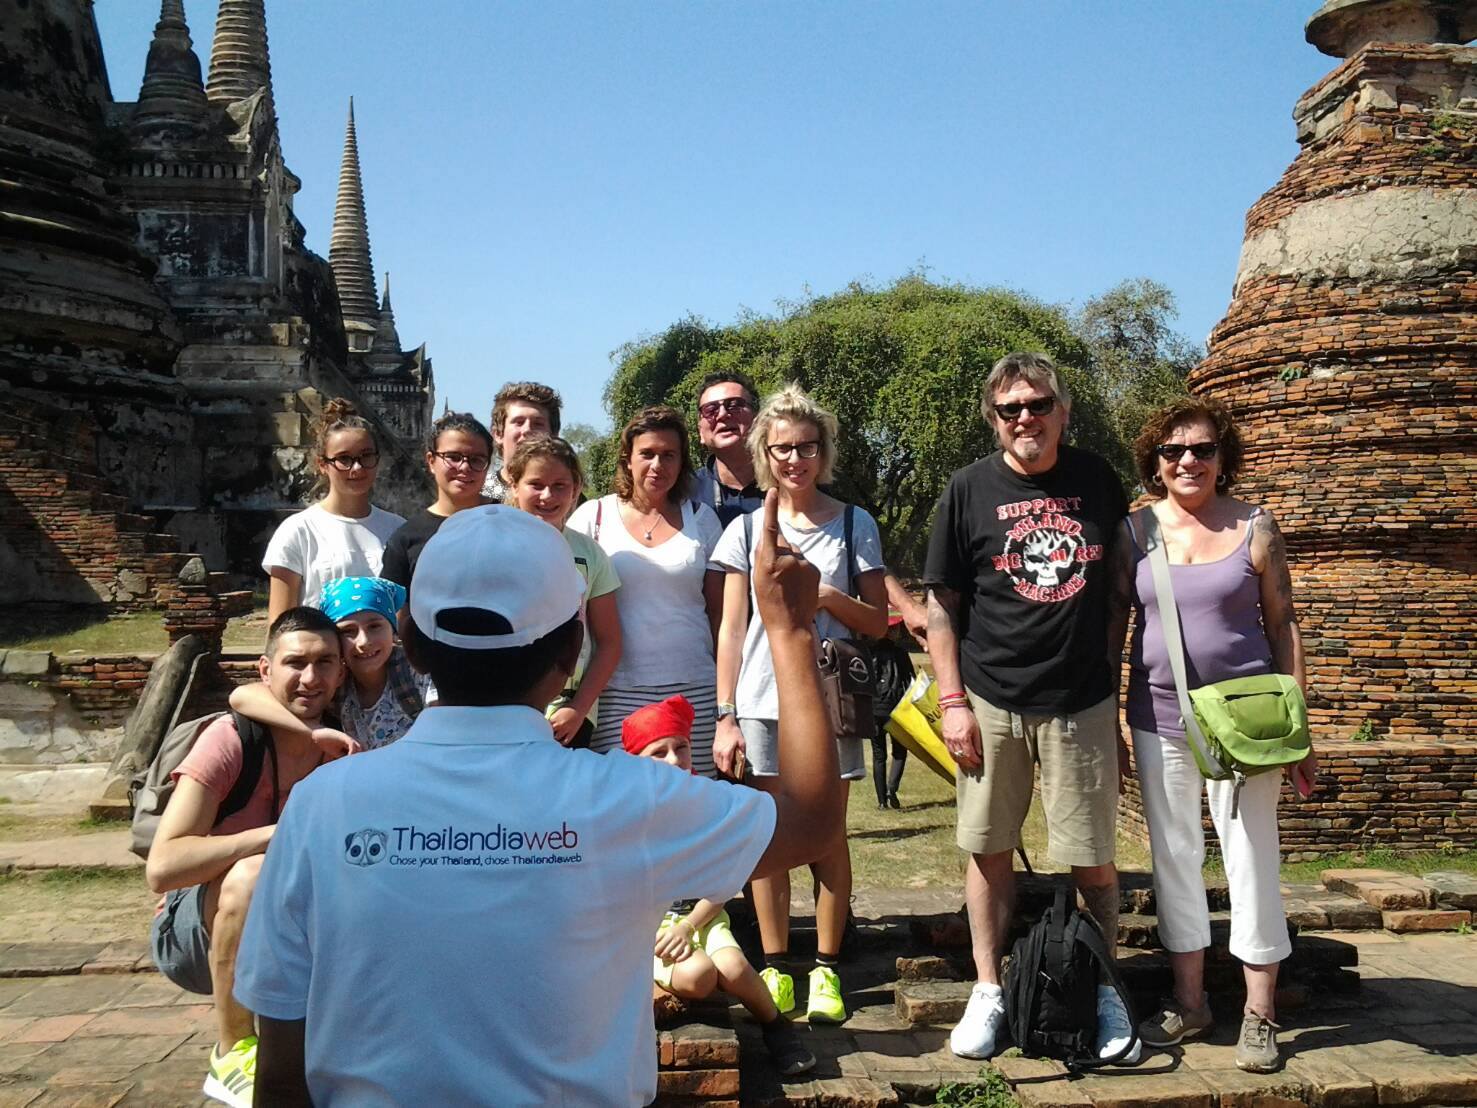 Thailandiaweb - tour operator Thailandia